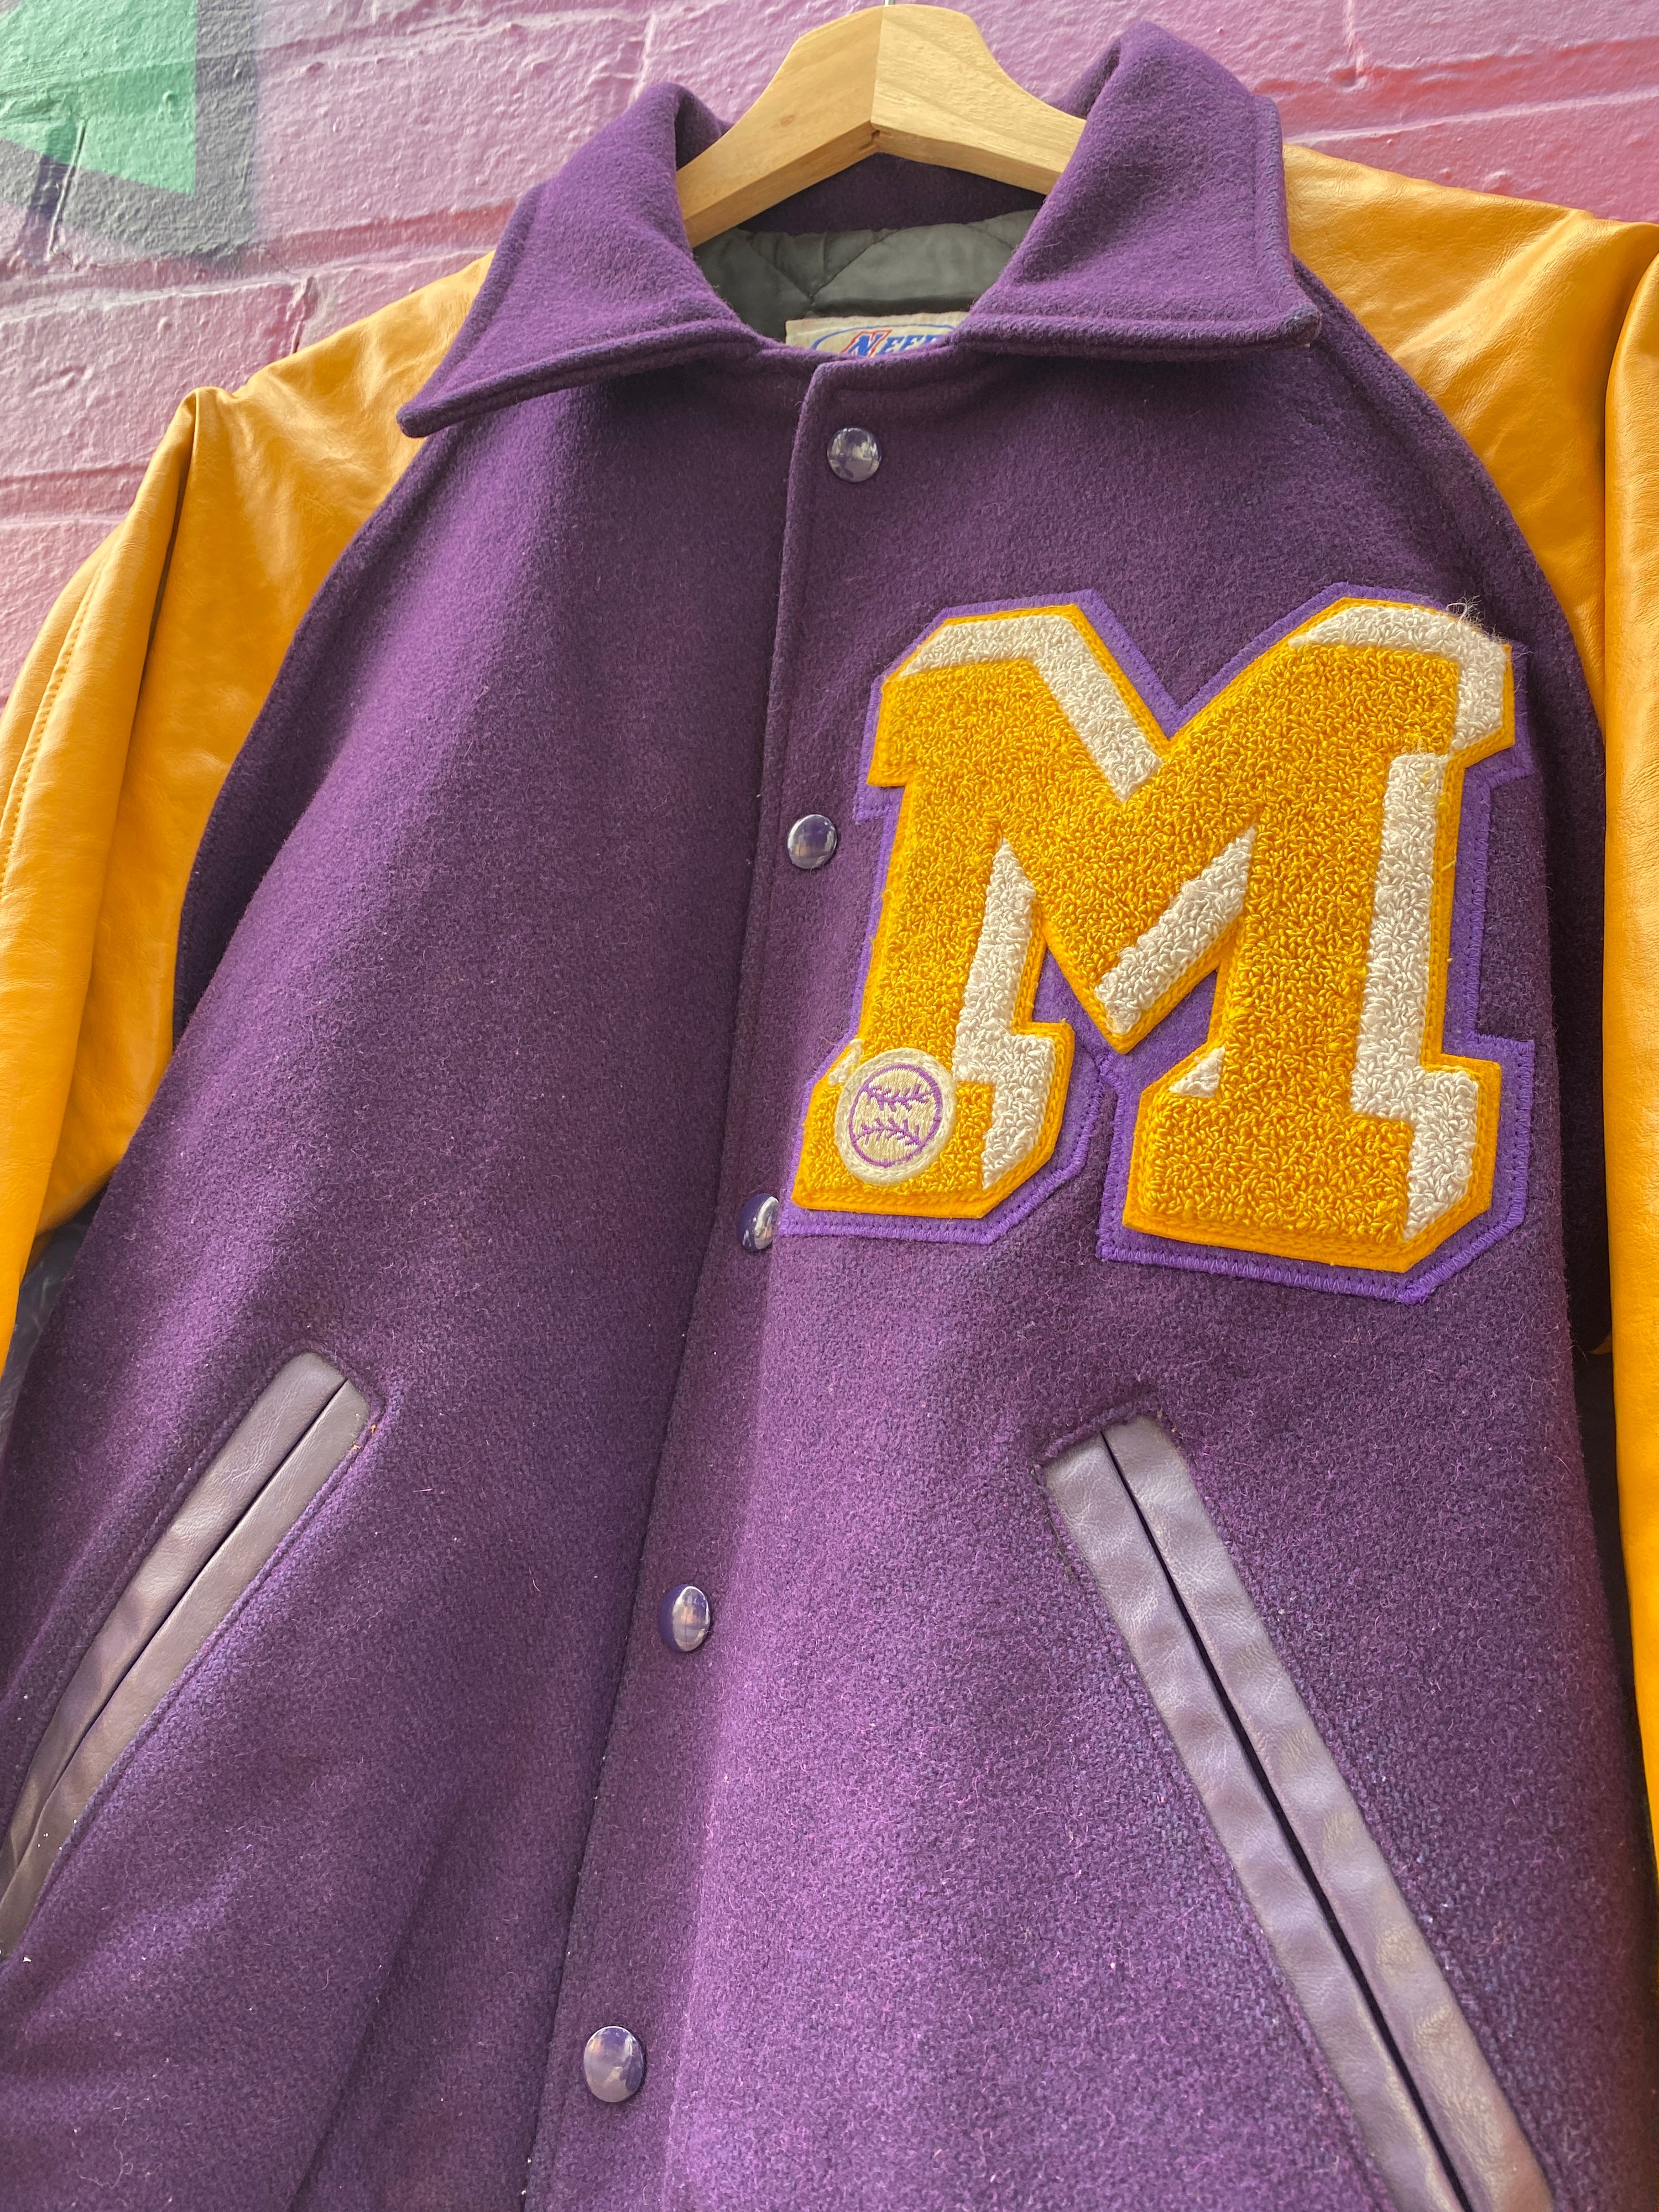 S - M Baseball Varsity Jacket Purple/Yellow